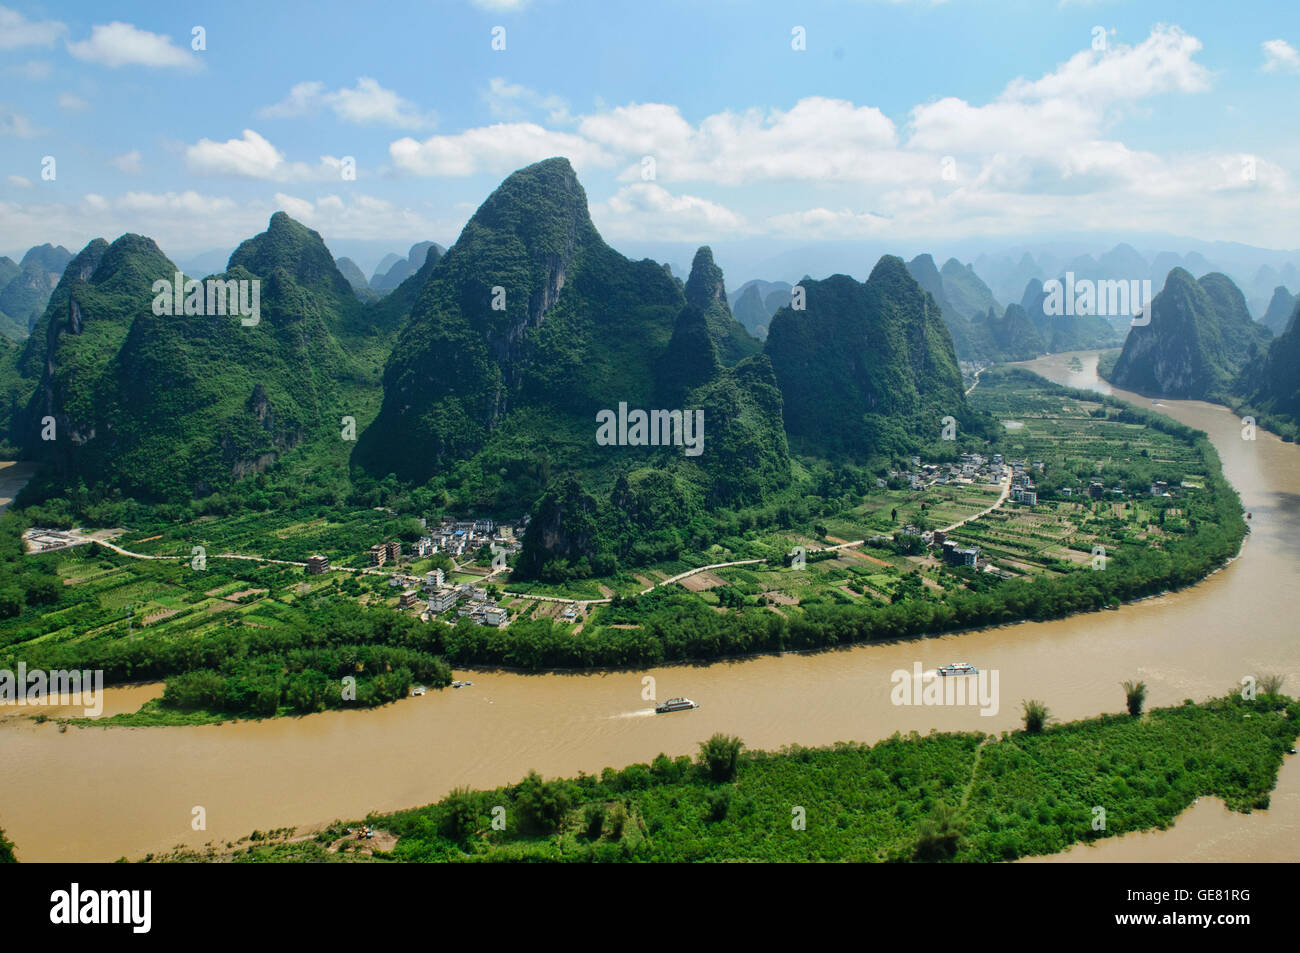 Li-Fluss und Blick auf die Berge von Laozhai Shan Berg, Xingping, autonome Region Guangxi, China Stockfoto